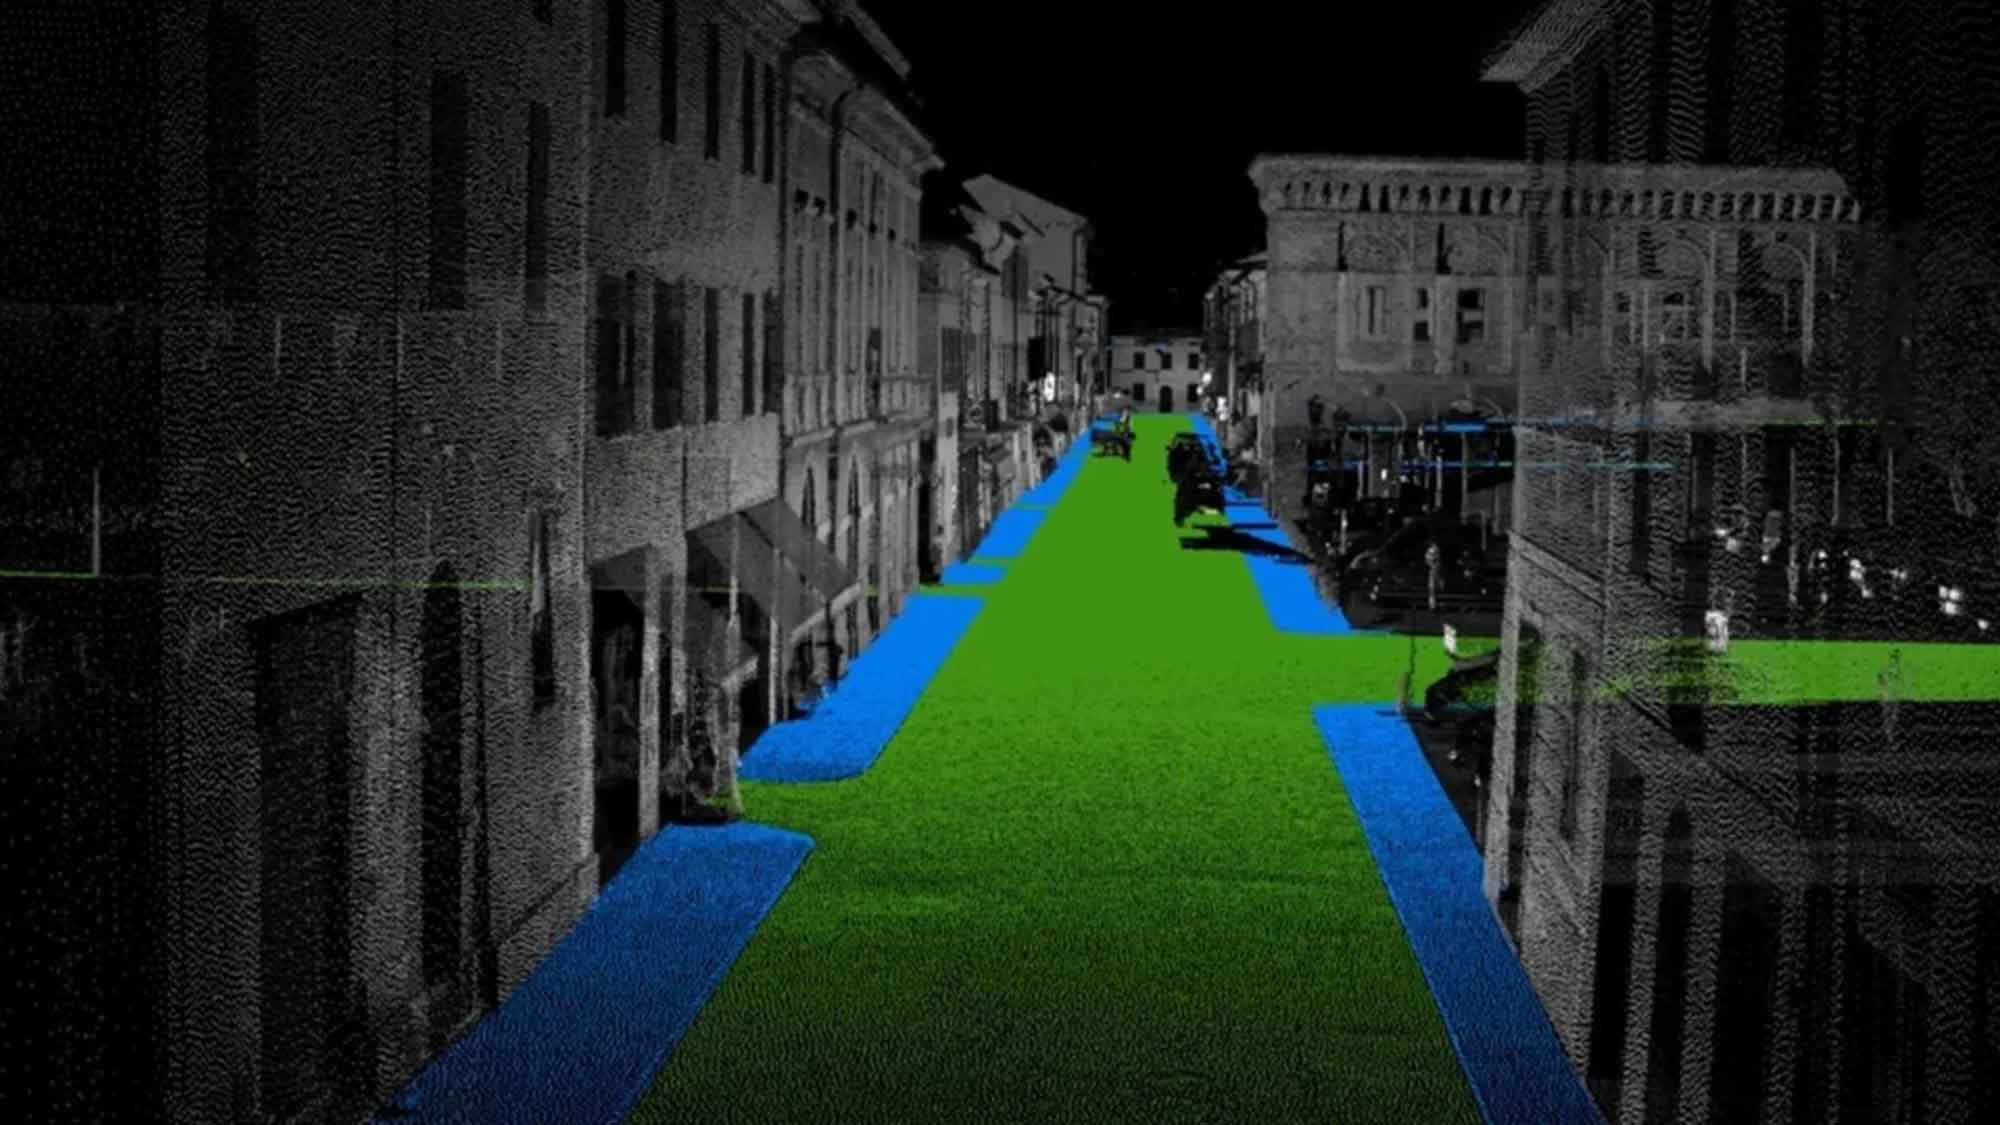 Disability, Politecnico di Milano experiments with AI to make historic city centres accessible